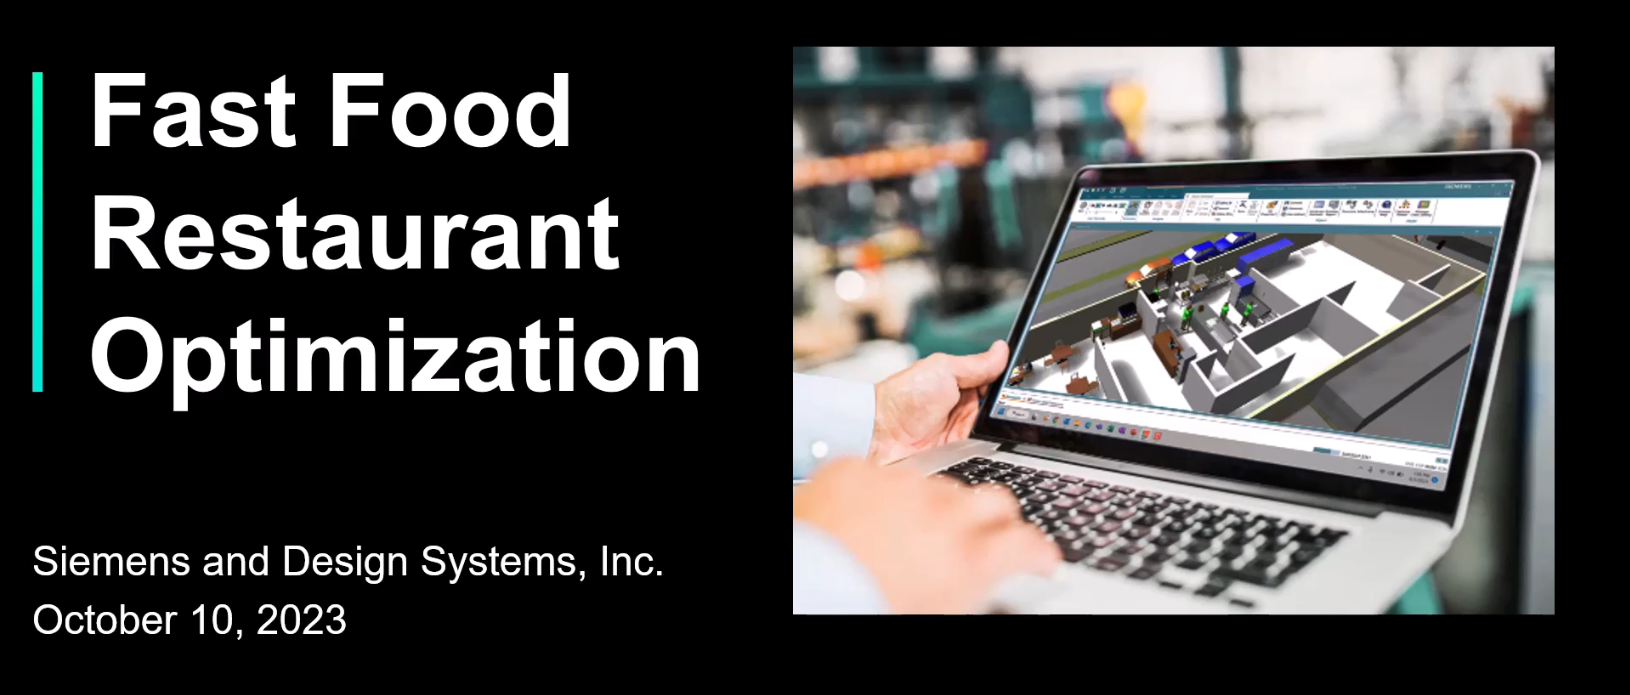 Fast Food Restaurant Optimization: Enhancing Efficiency Through Adaptive Simulation